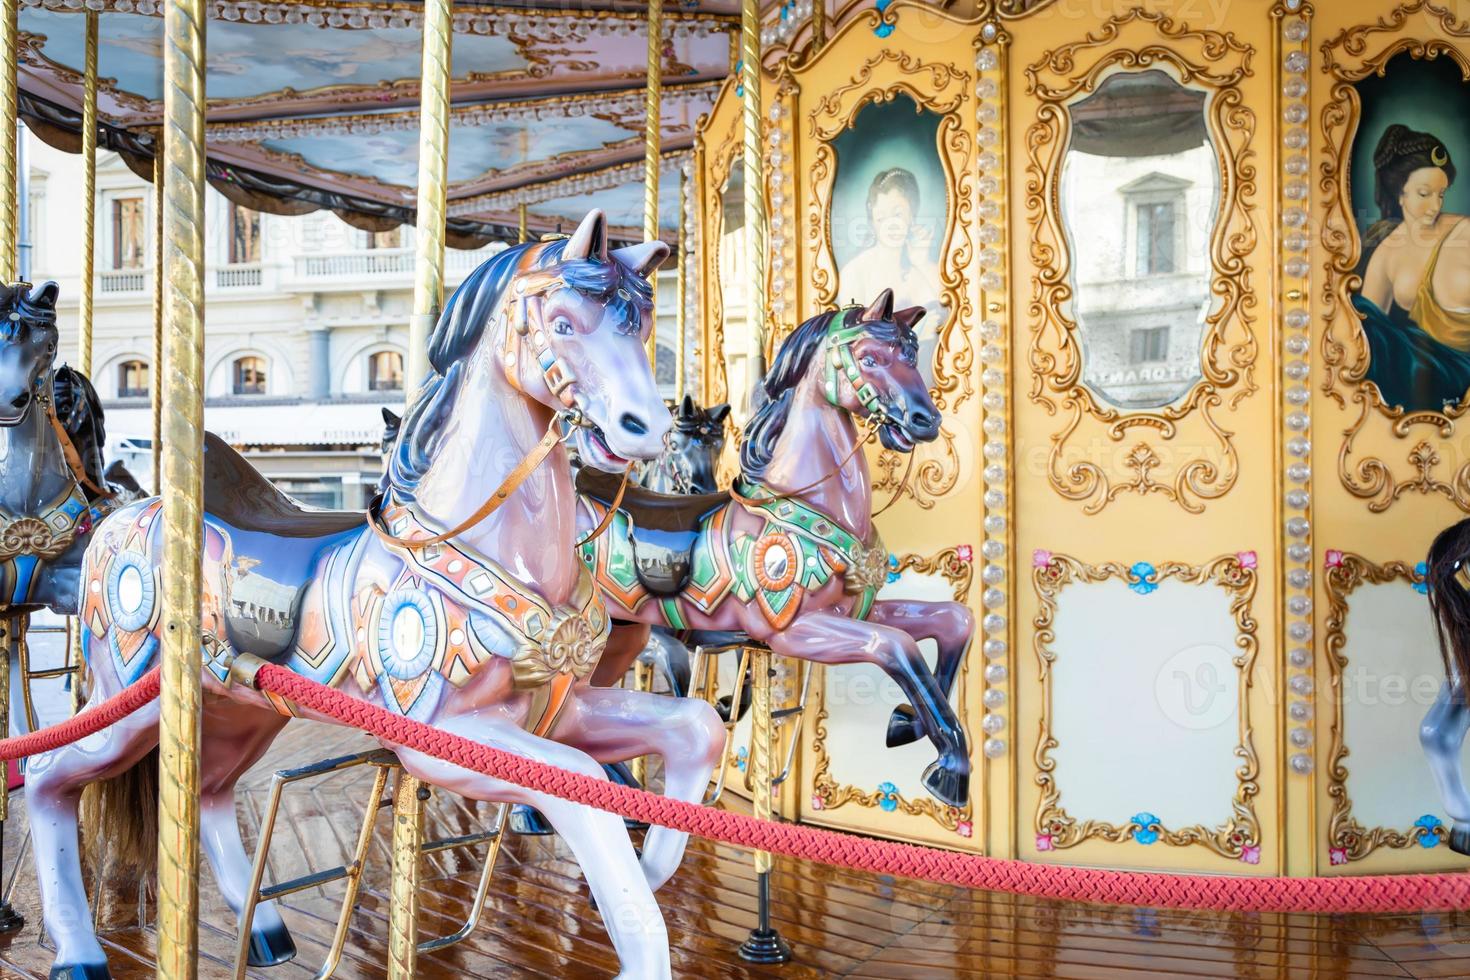 florencia, italia - alrededor de marzo de 2022 - caballo de carrusel vintage - atracción antigua. foto